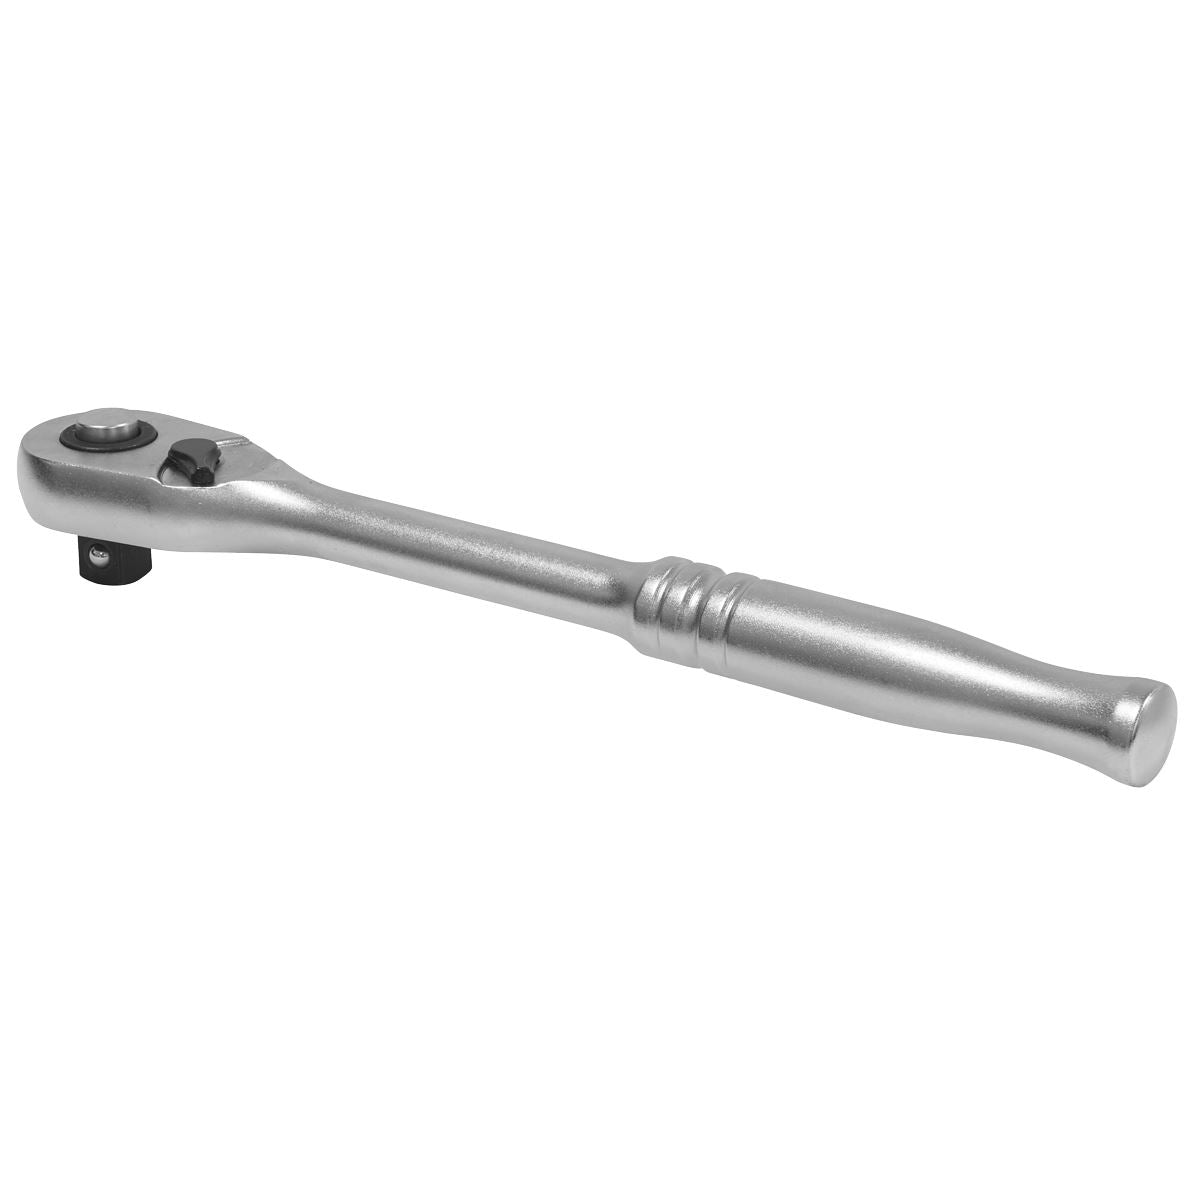 Sealey Premier Ratchet Wrench 3/8"Sq Drive 90-Tooth Flip Reverse - Premier Platinum Series